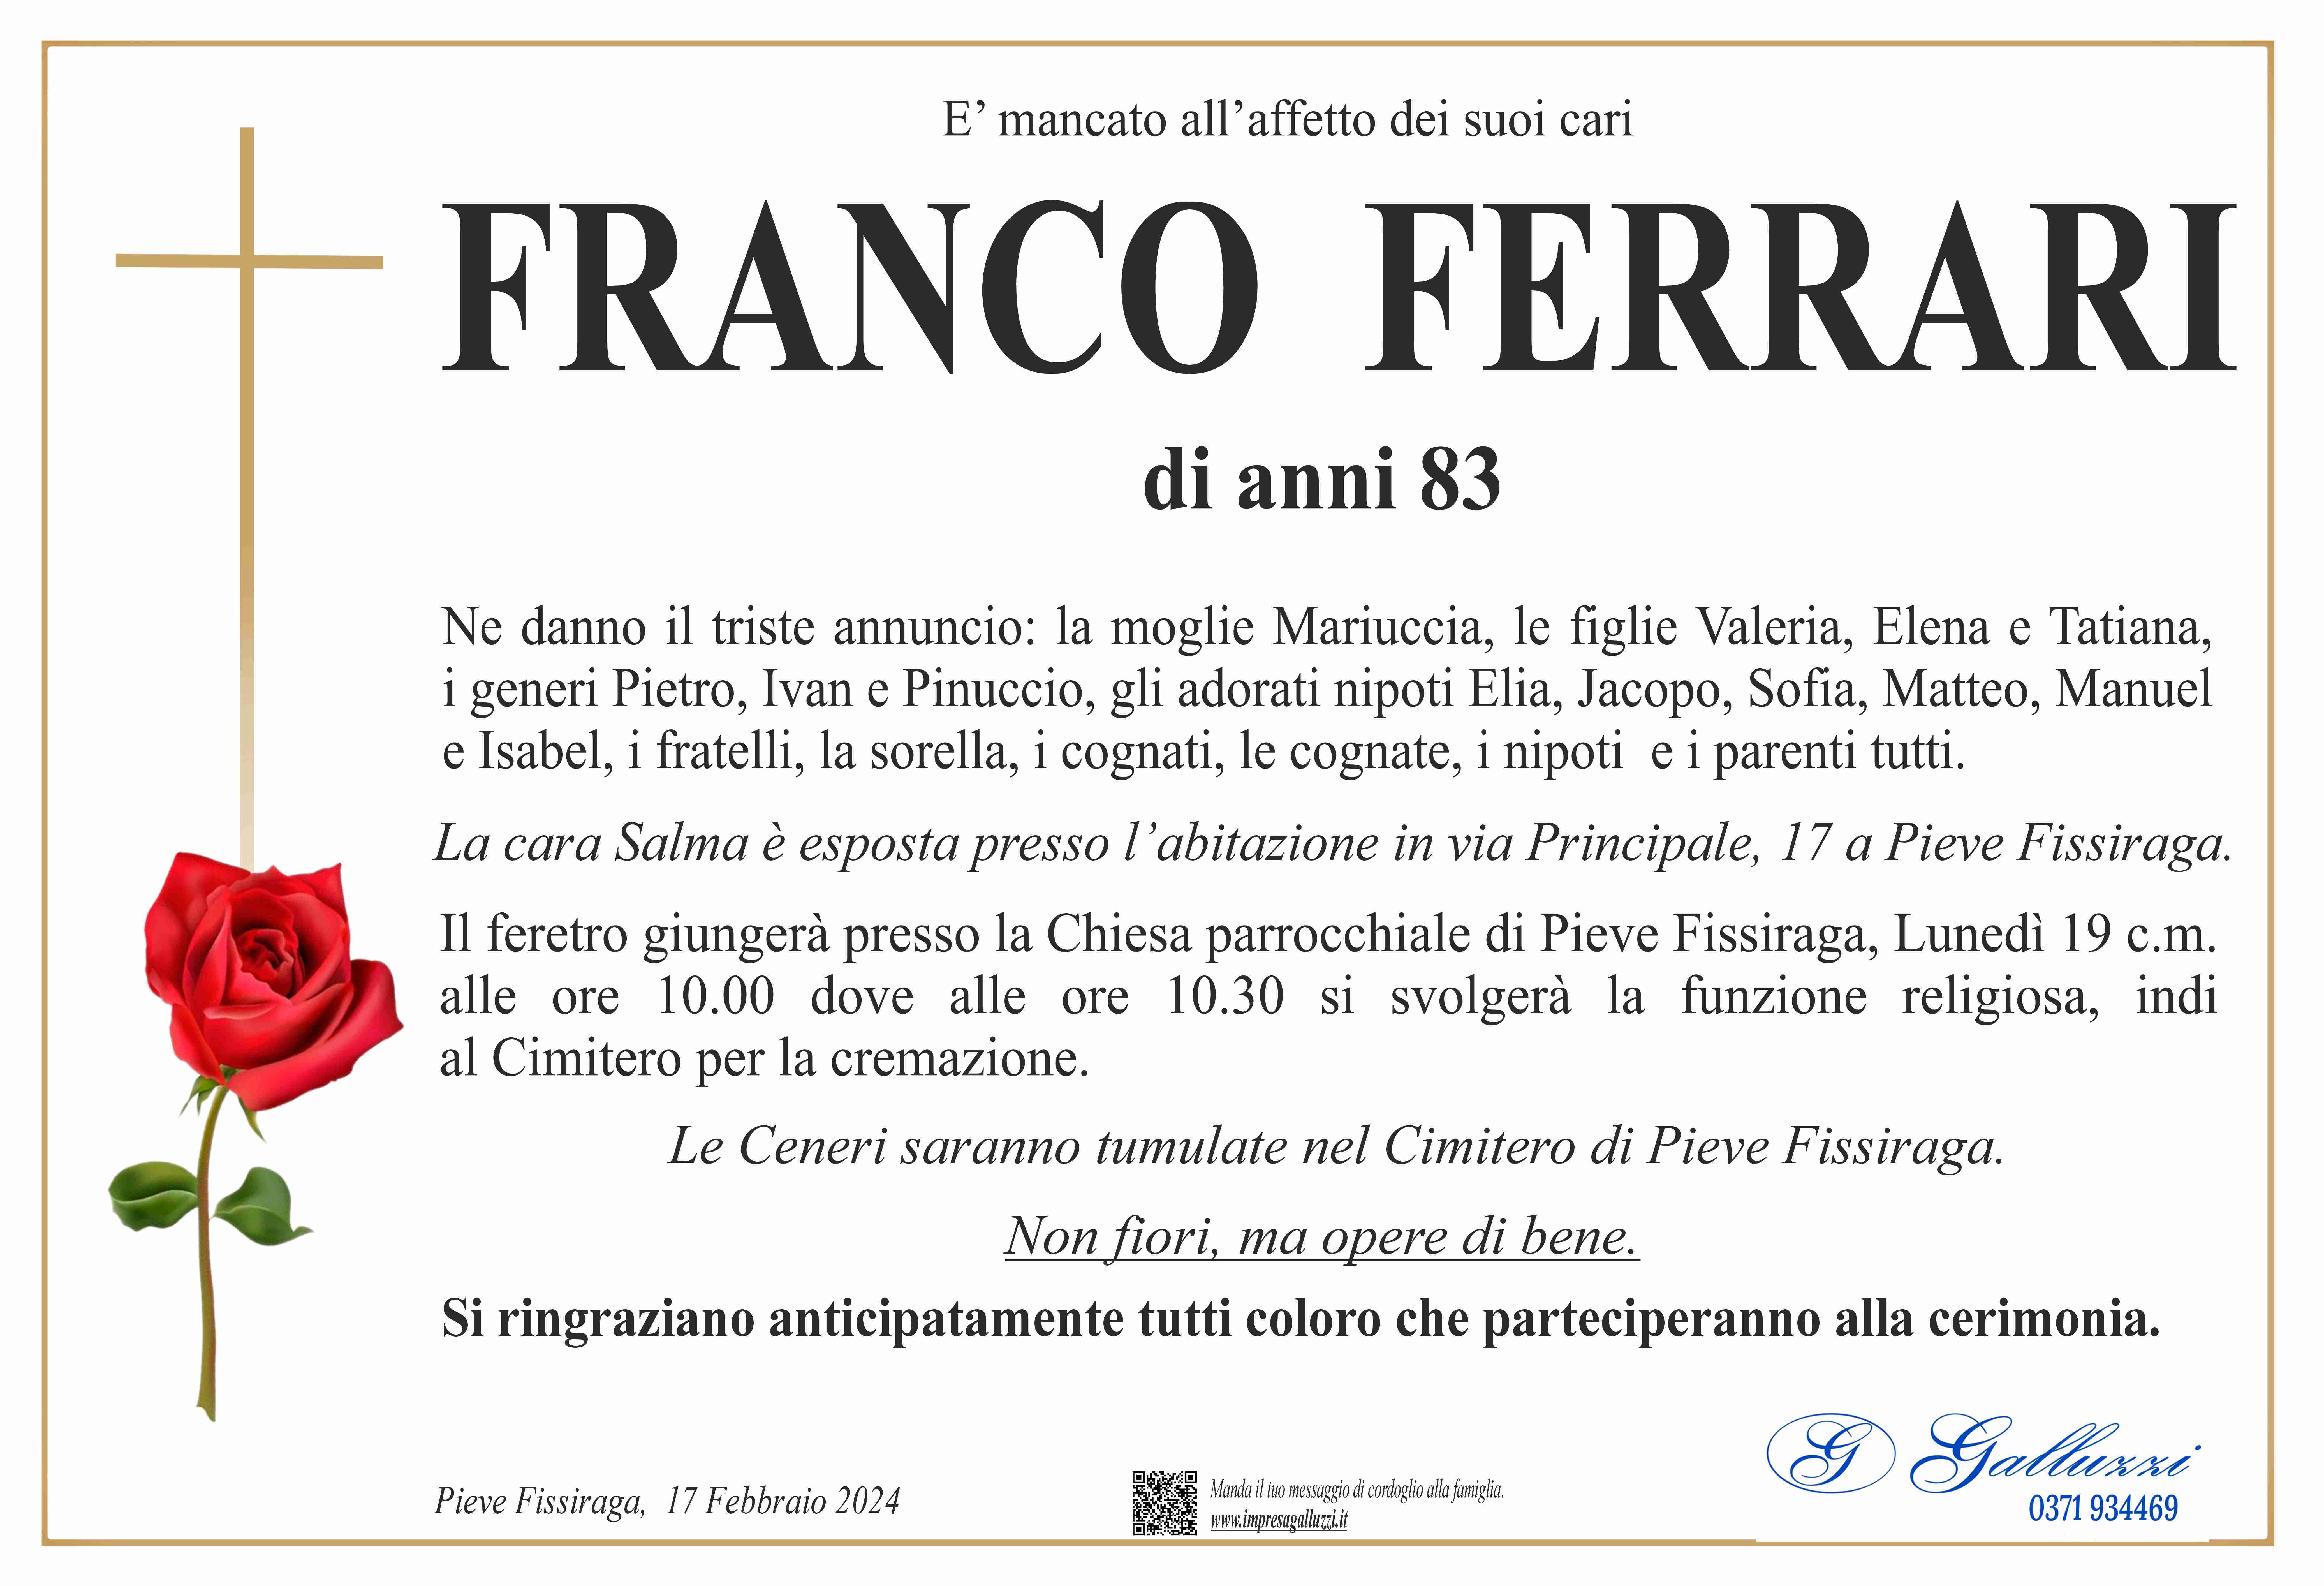 Franco Ferrari